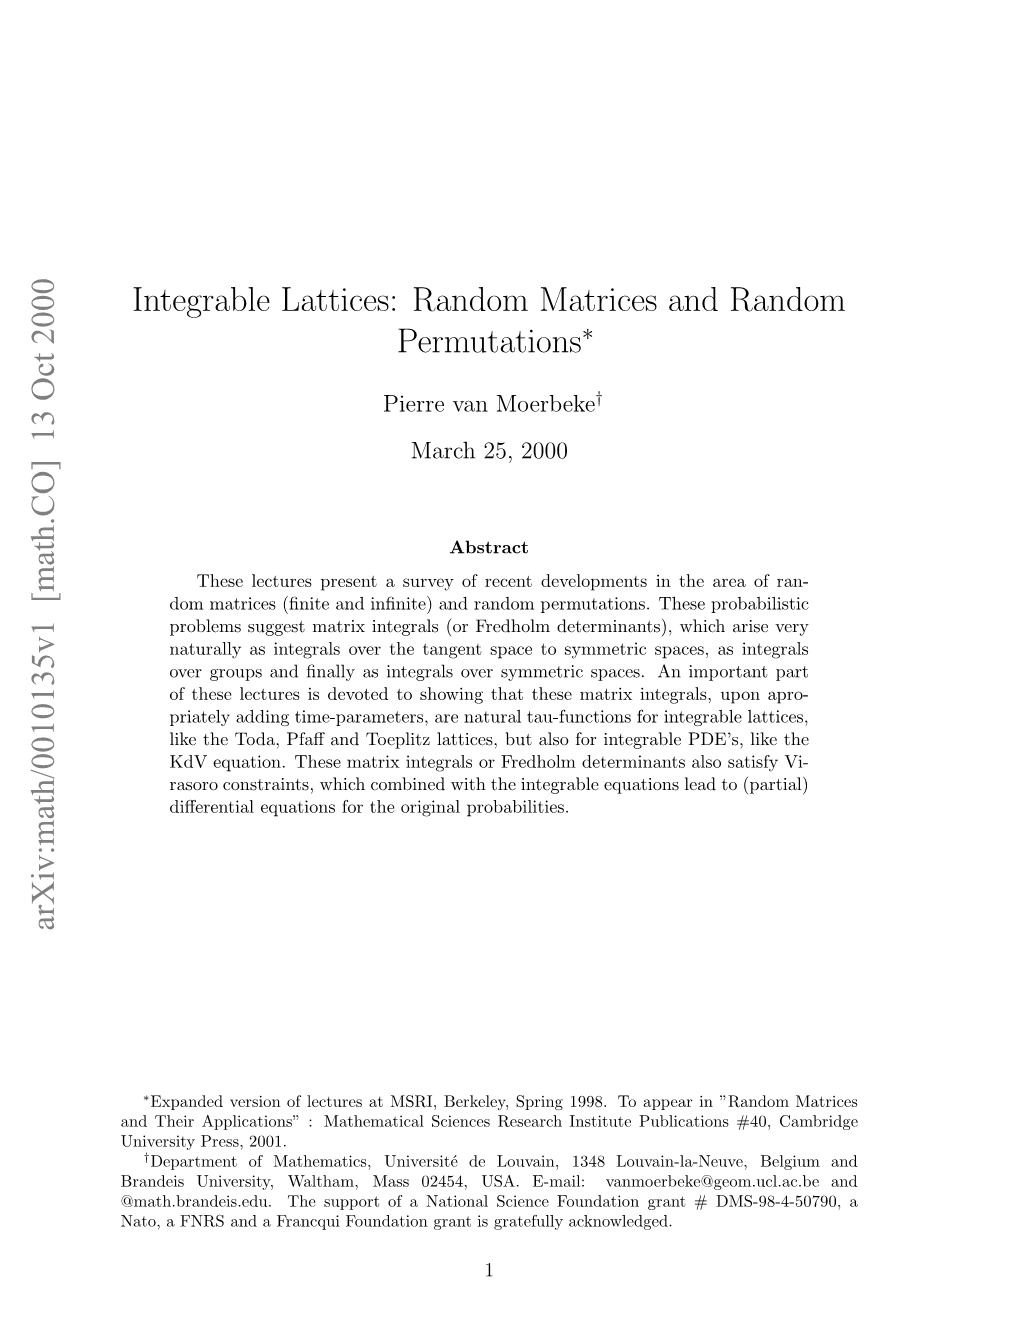 Integrable Lattices: Random Matrices and Random Permutations